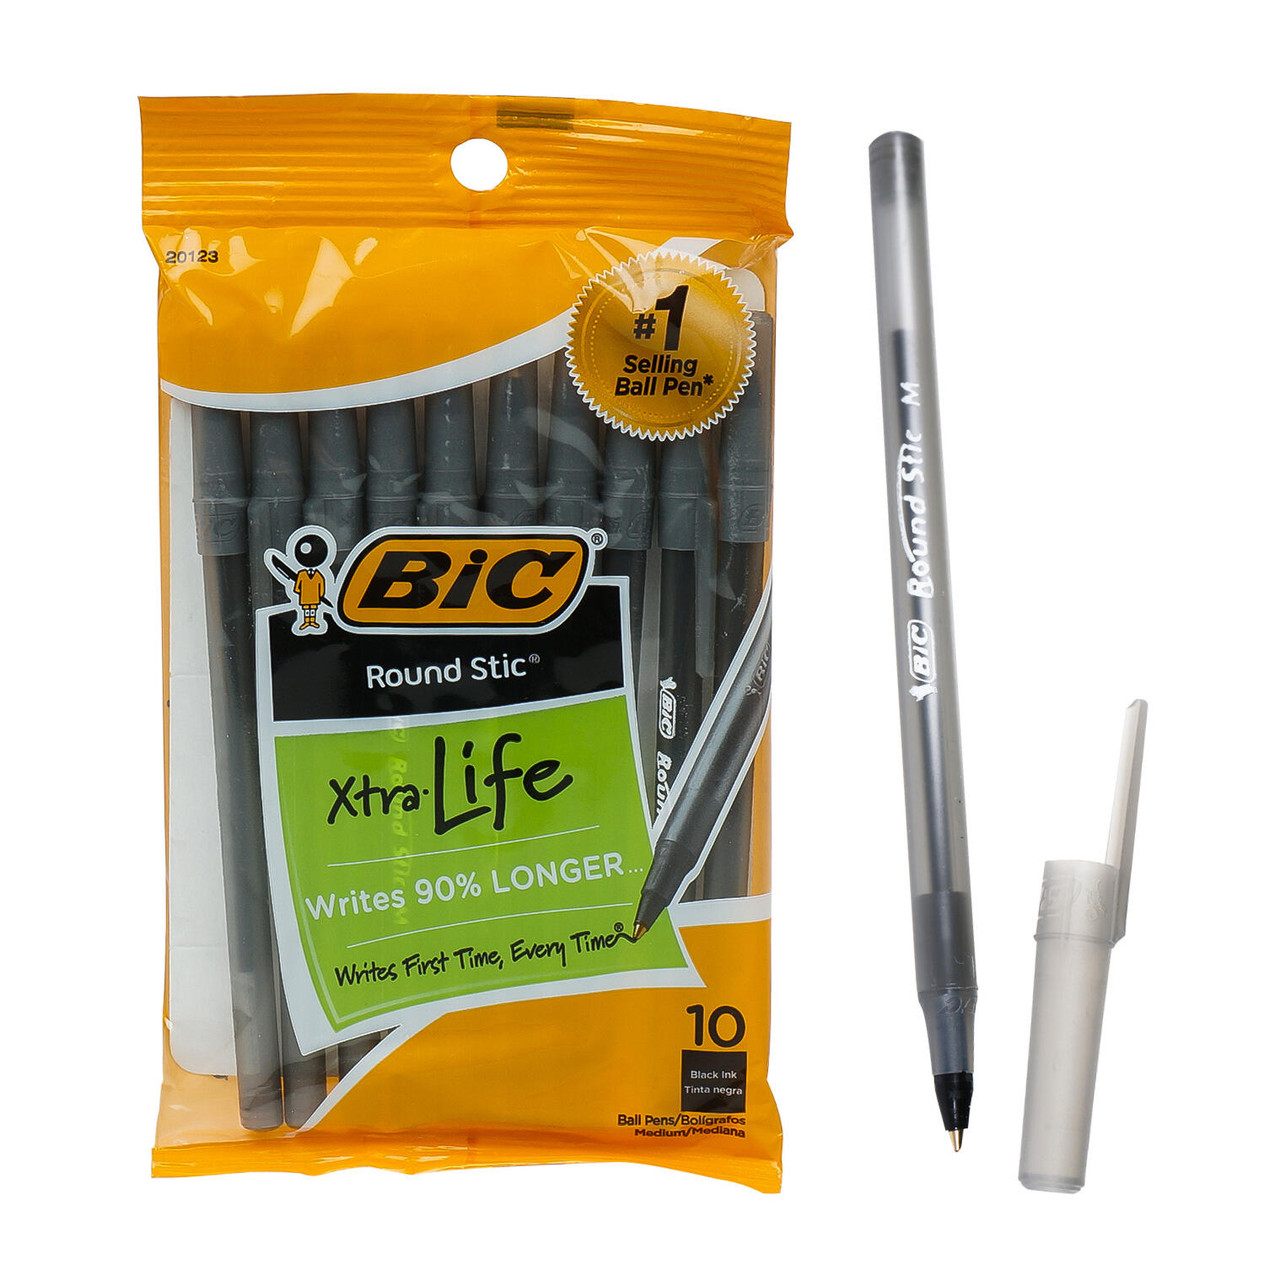 BIC Xtra Life Ballpoint Pens, Medium Tip, 10ct - Black Ink